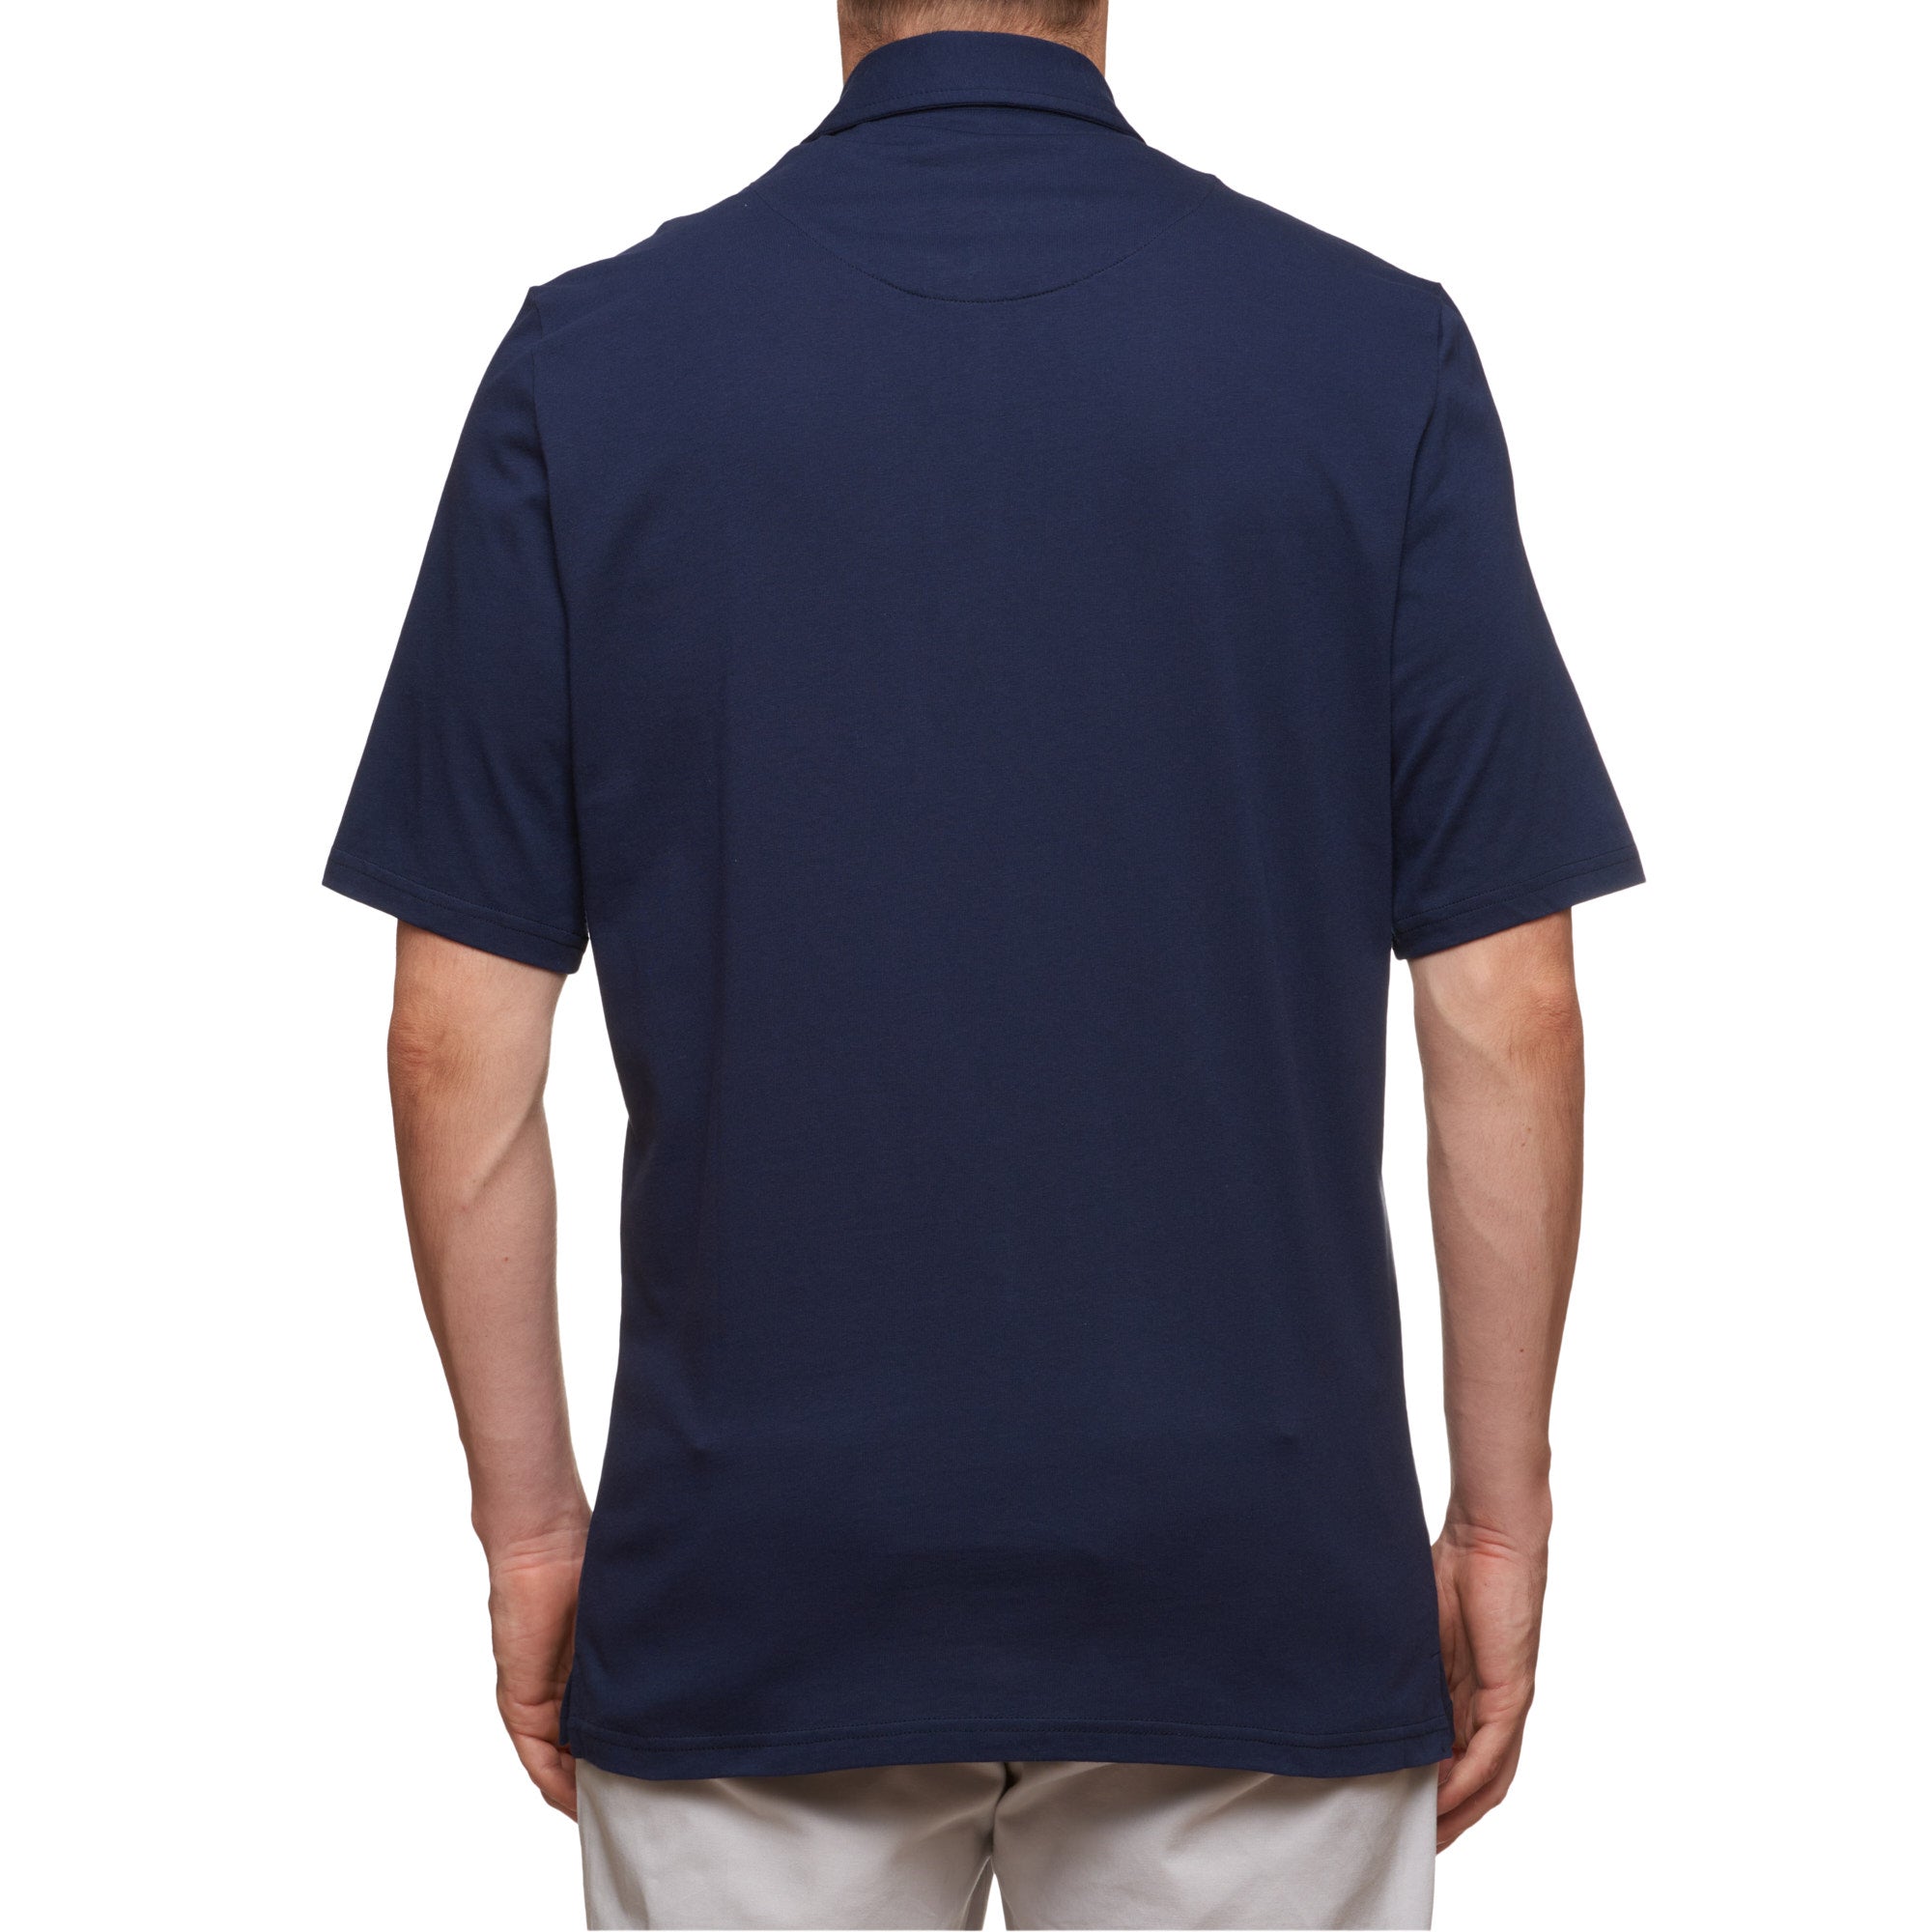 SARTORIO Napoli by KITON Navy Blue Cotton Jersey Short Sleeve Polo Shirt NEW SARTORIO